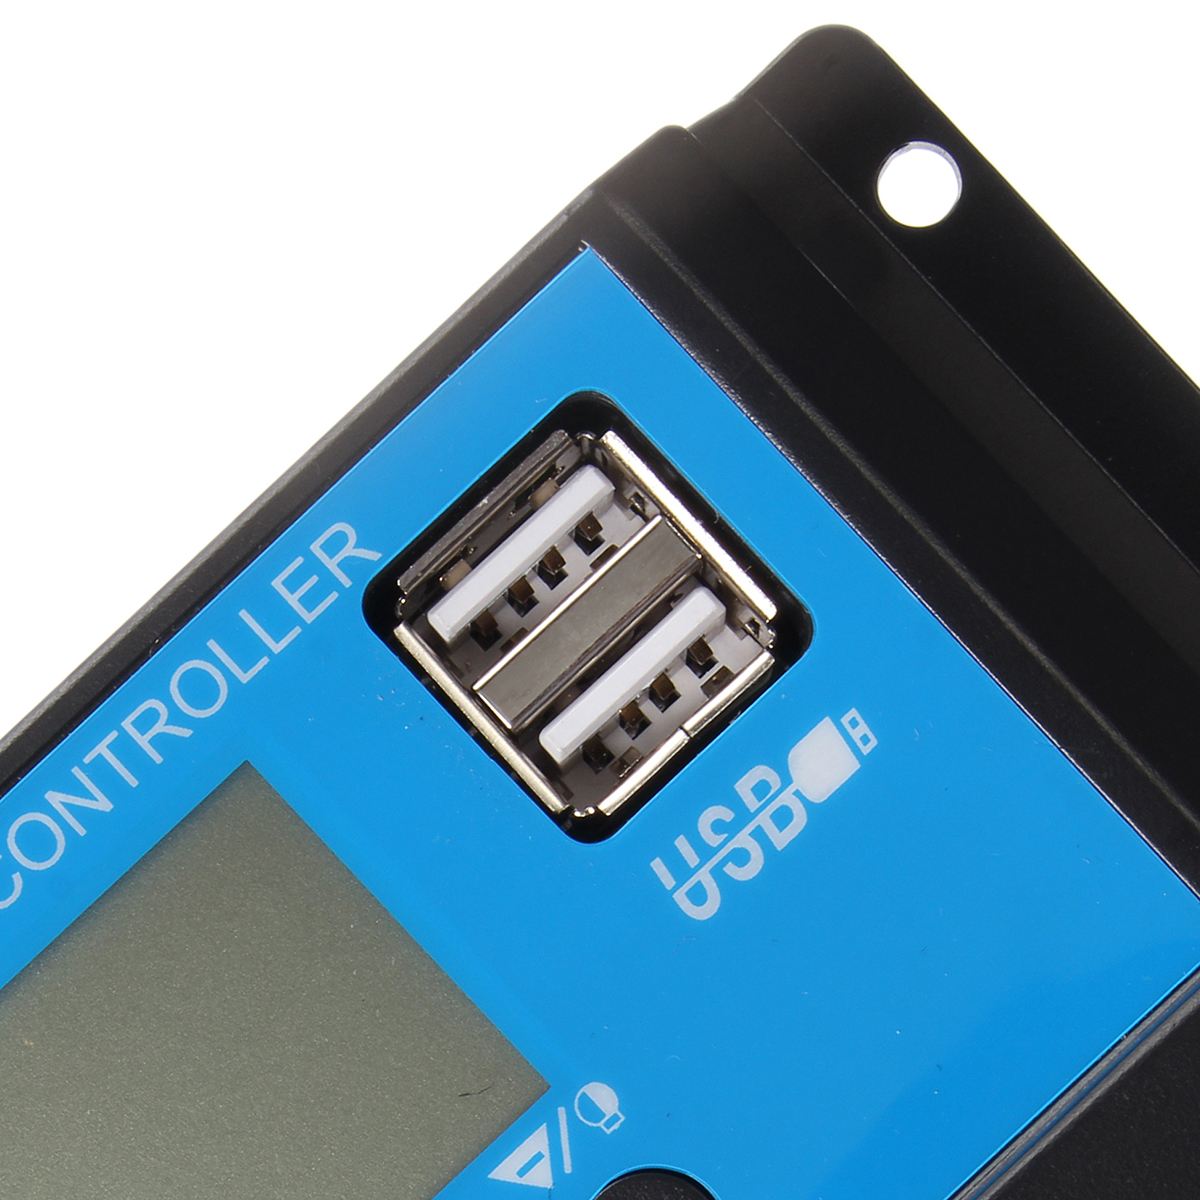 102030A-USB-Solar-Panel-Battery-Regulator-Charge-Intelligent-Controller-1224V-1143533